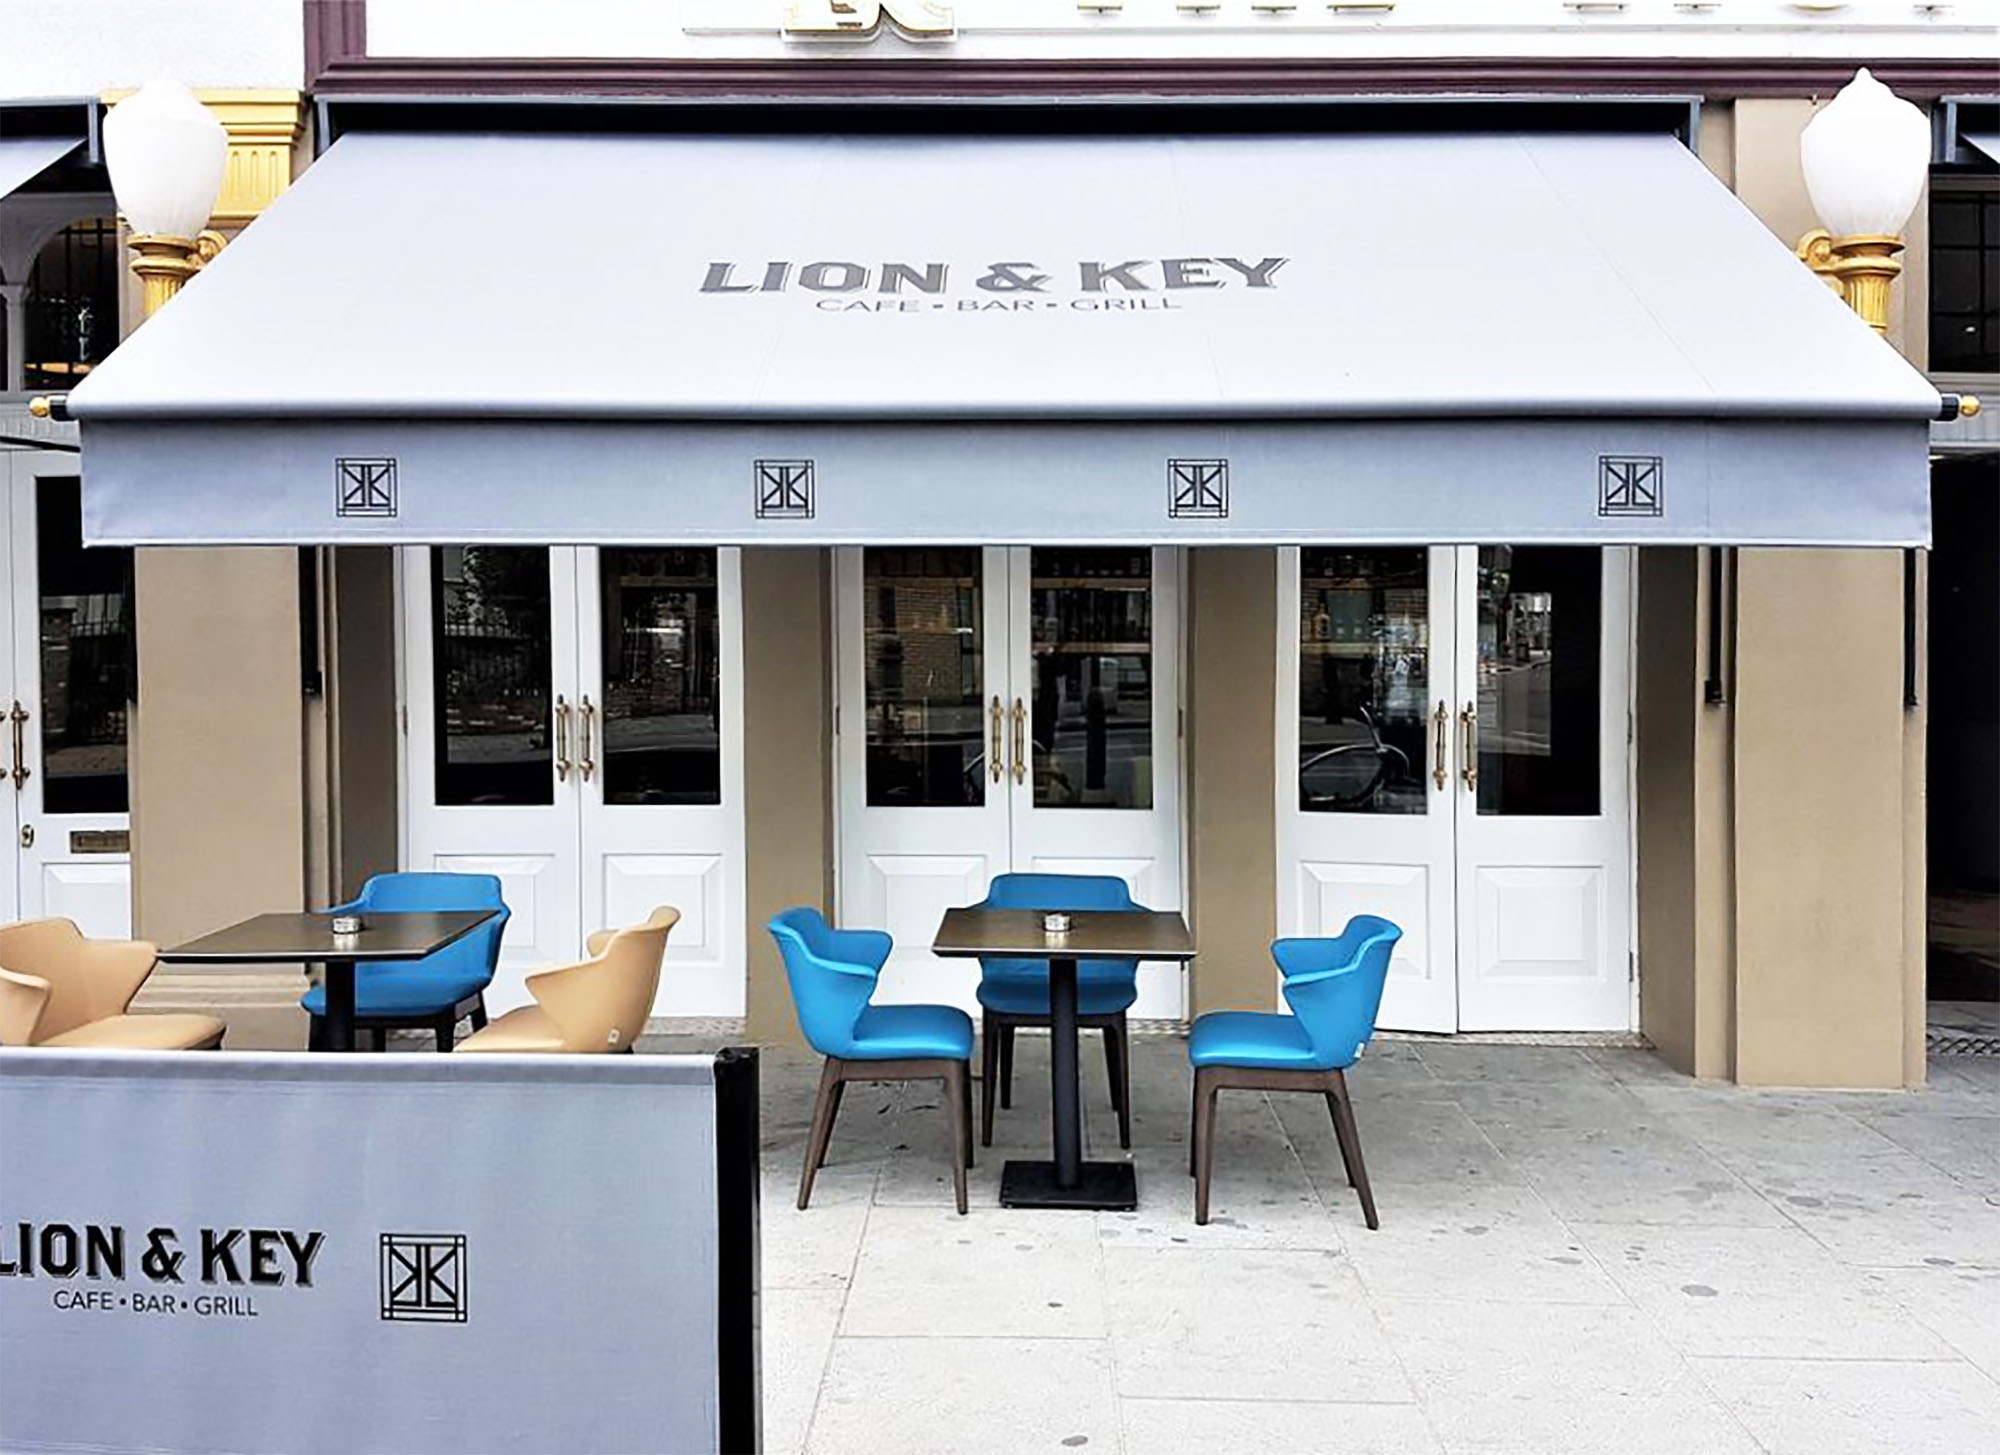 Lion & key awnings